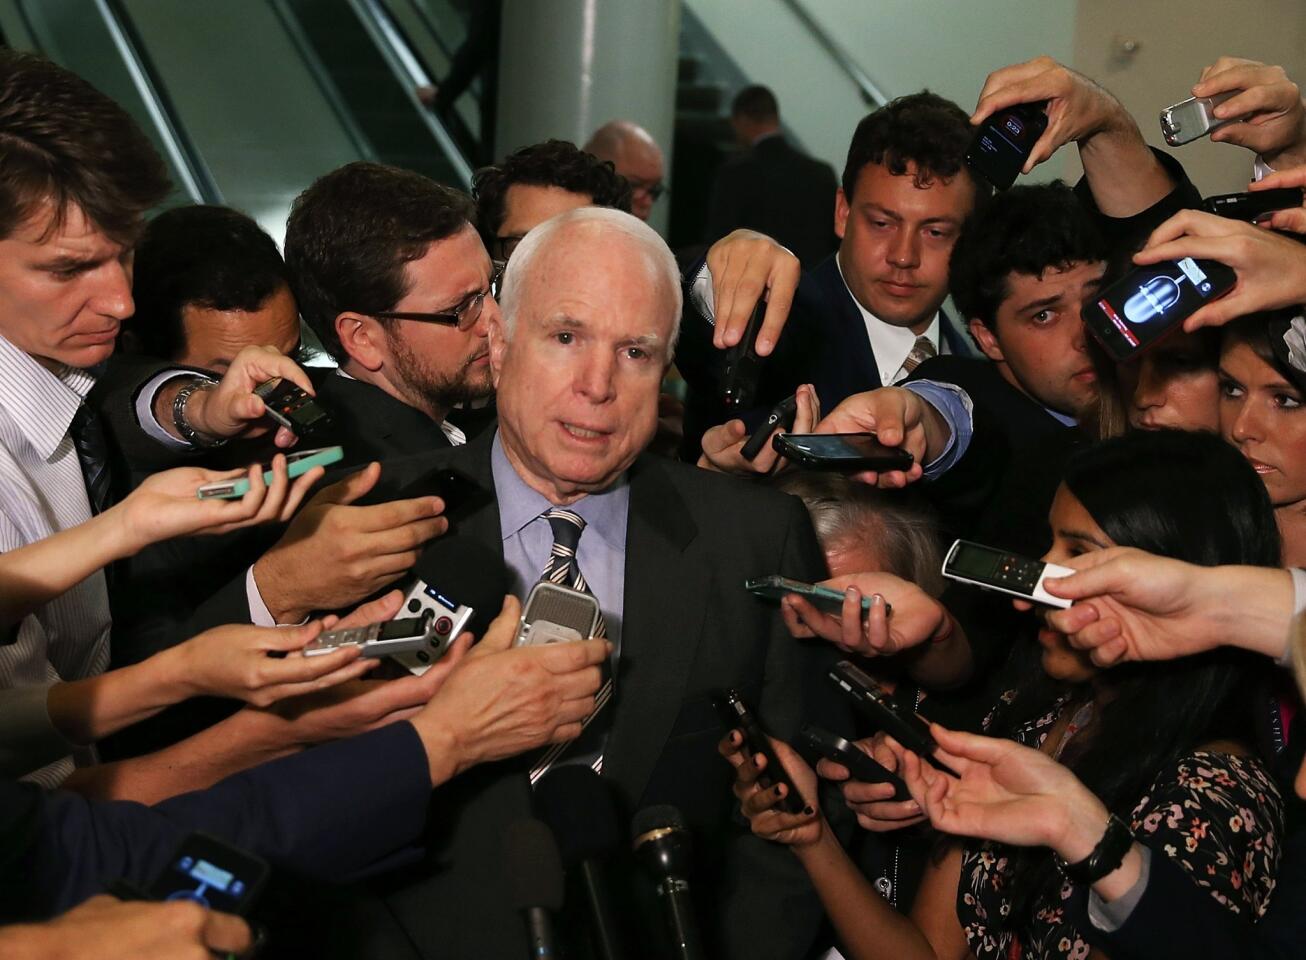 McCain swarmed